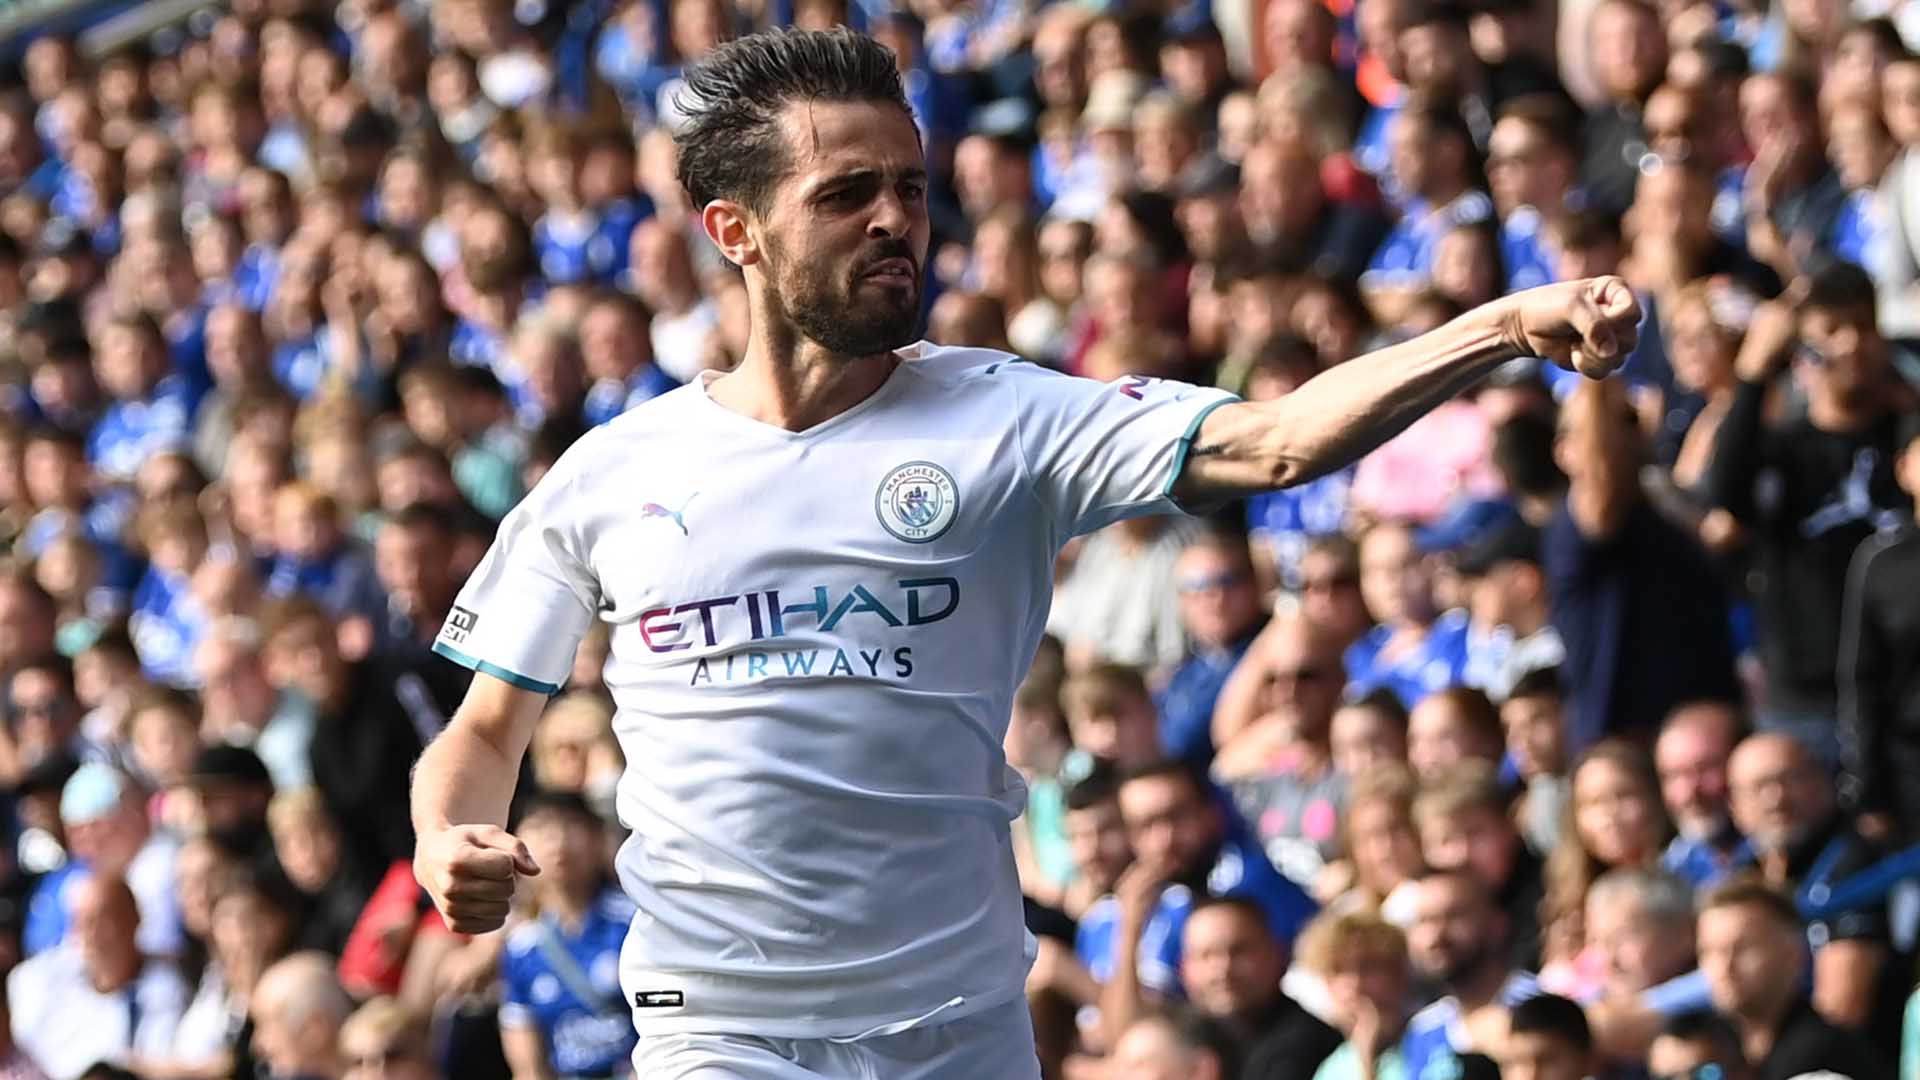 Leicester-Manchester City (0-1) : Bernardo Silva libère les Citizens